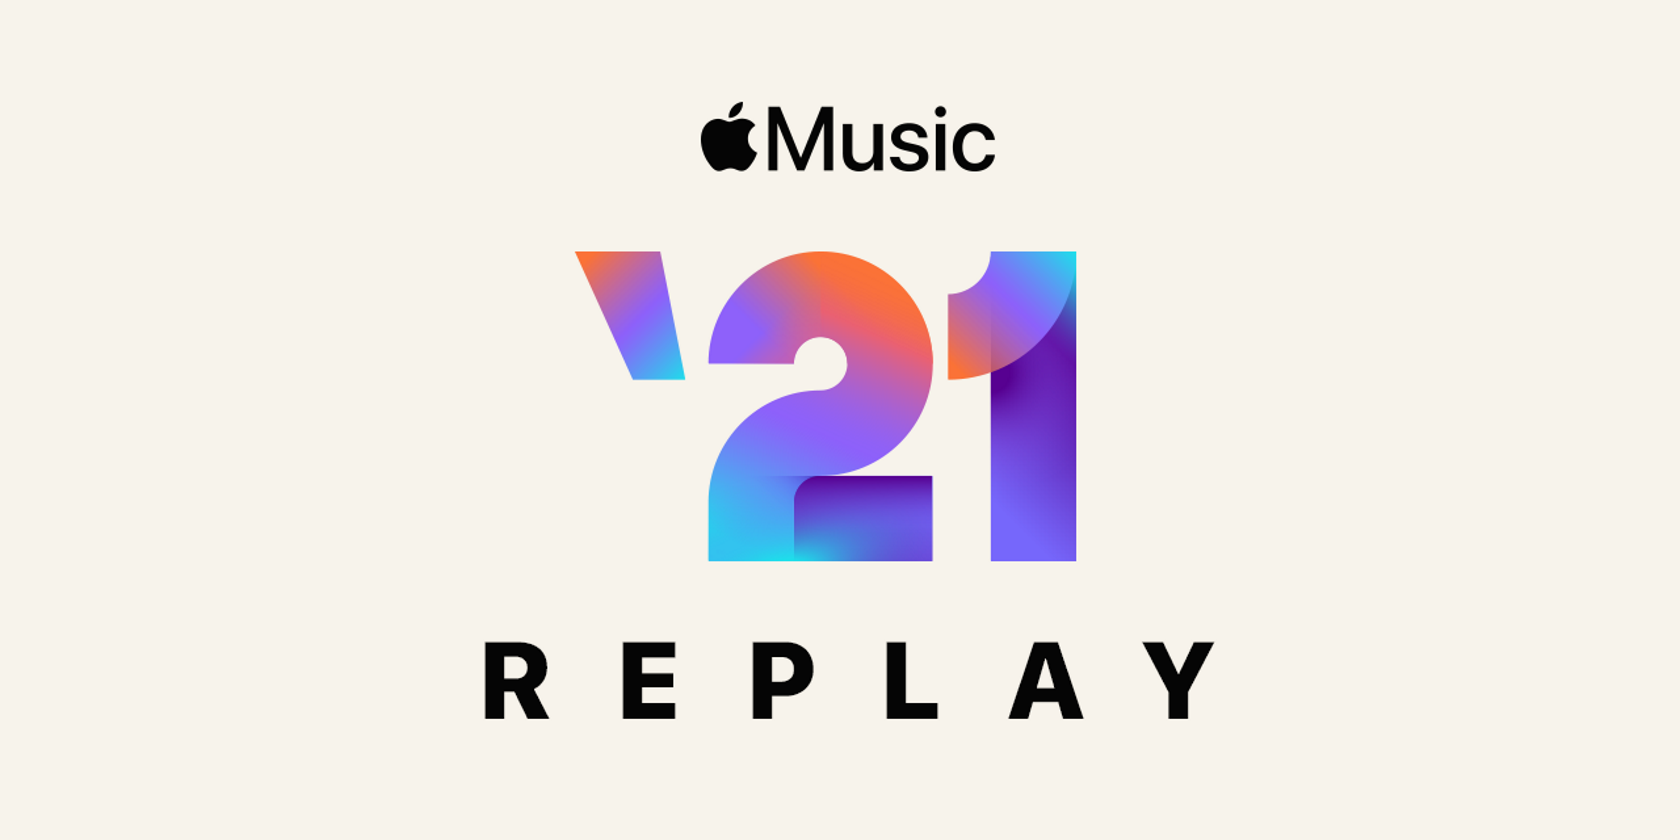 Replay Music Apple Telegraph